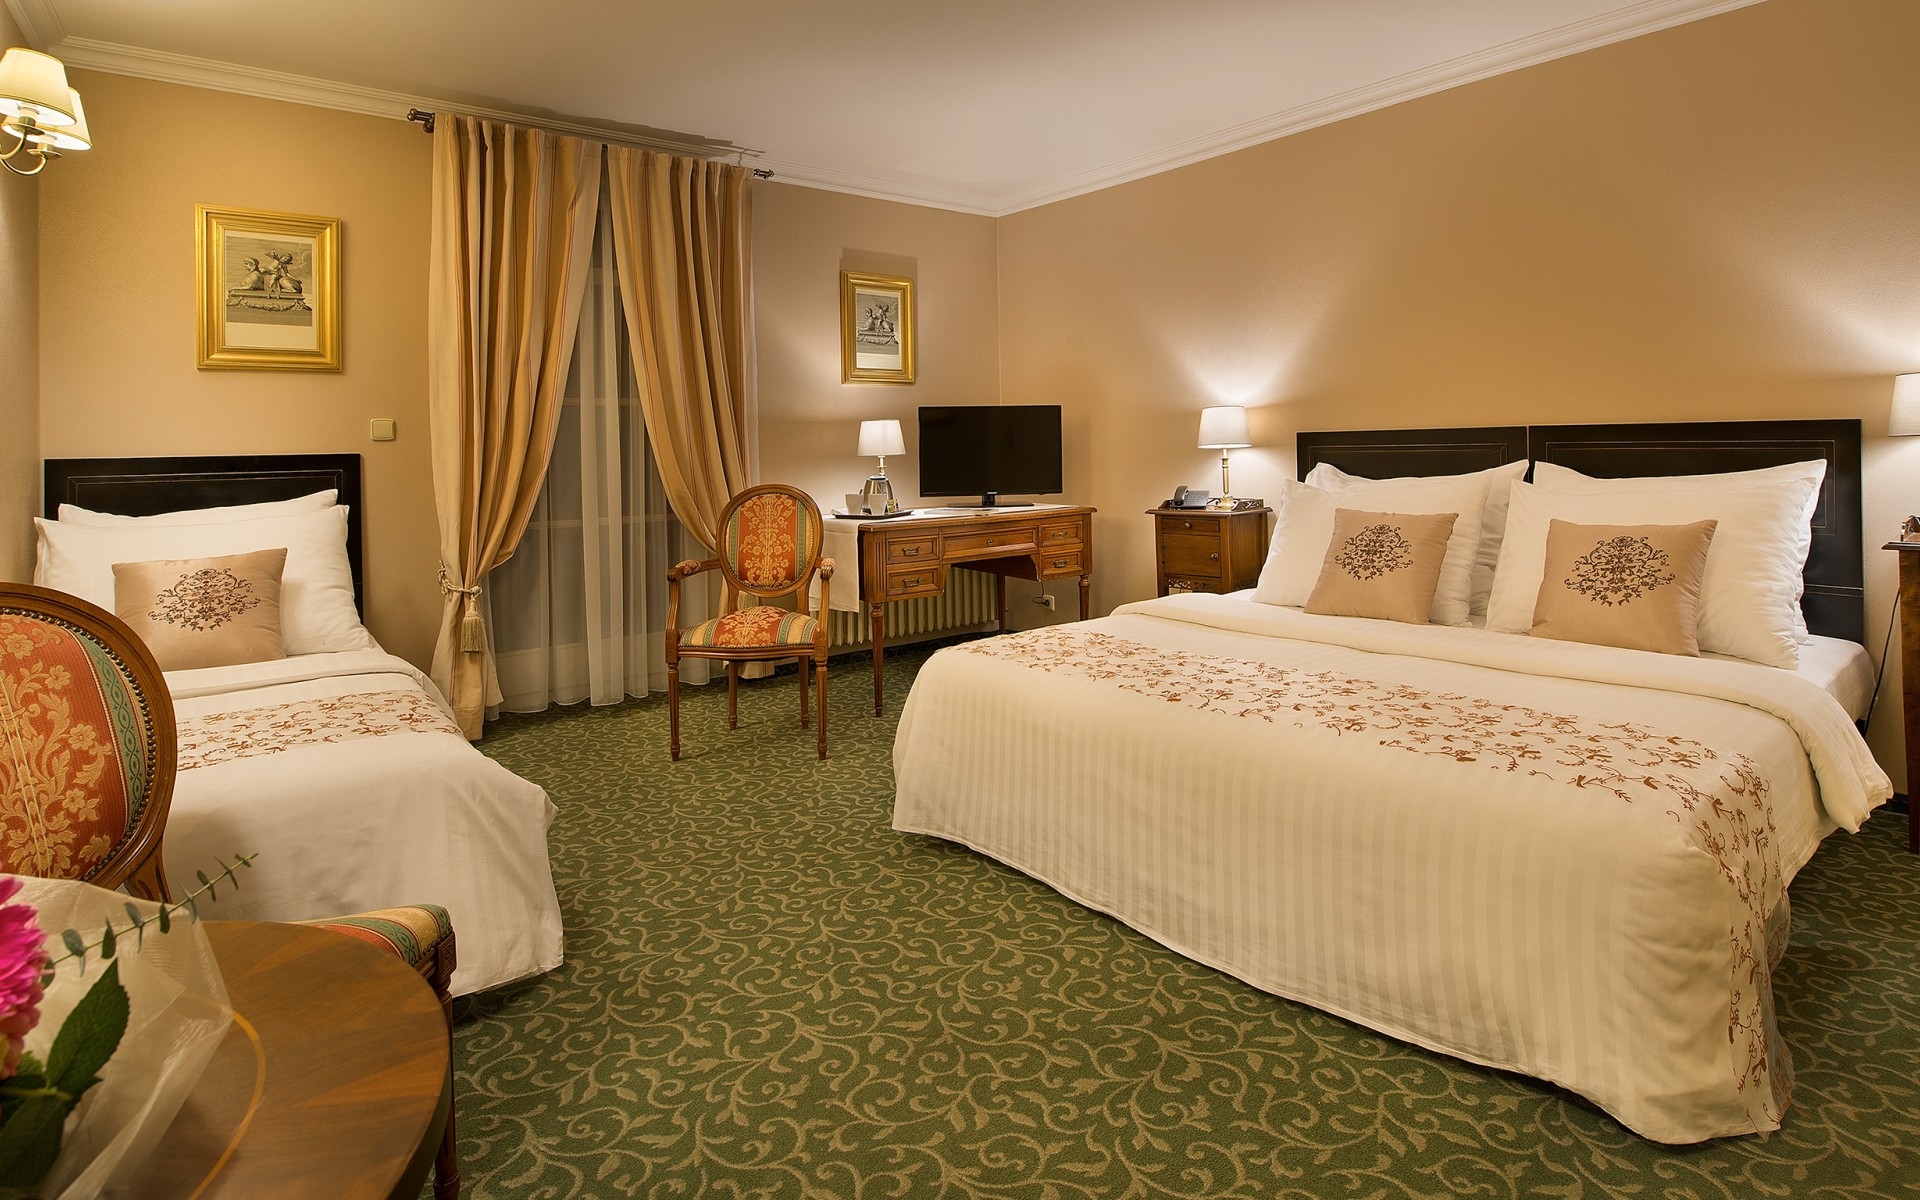 Hotel Angelis Prague 5 | Accomodation Prague - official website